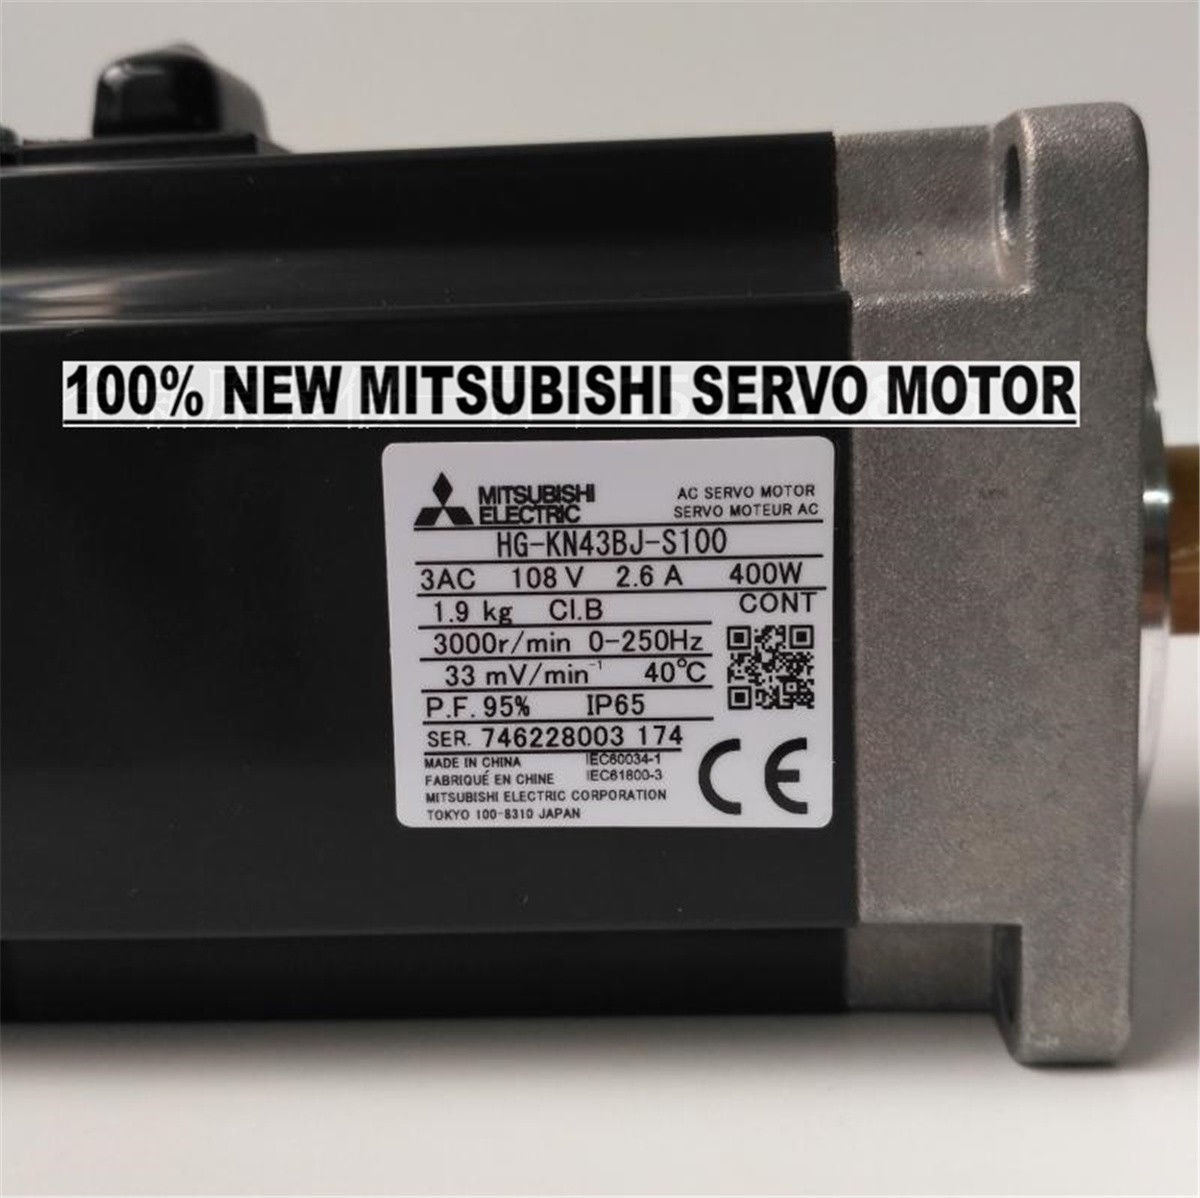 NEW Mitsubishi Servo Motor HG-KN43BJ-S100 in box HGKN43BJS100 - Click Image to Close